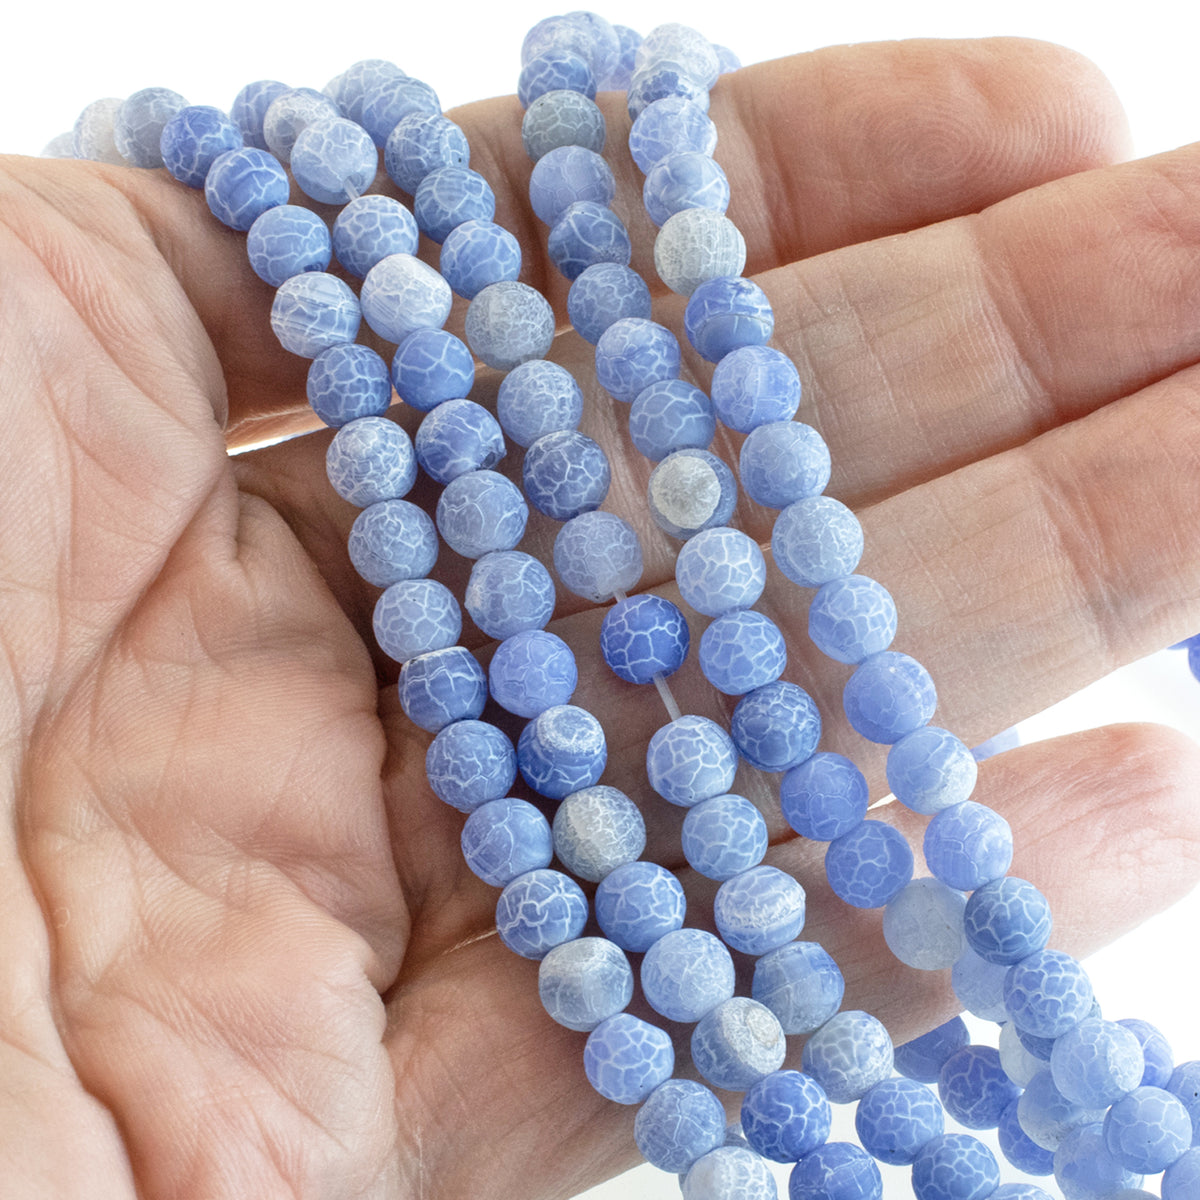 Azurlite Blue (Bahama) Glass Beads - 5 LBS